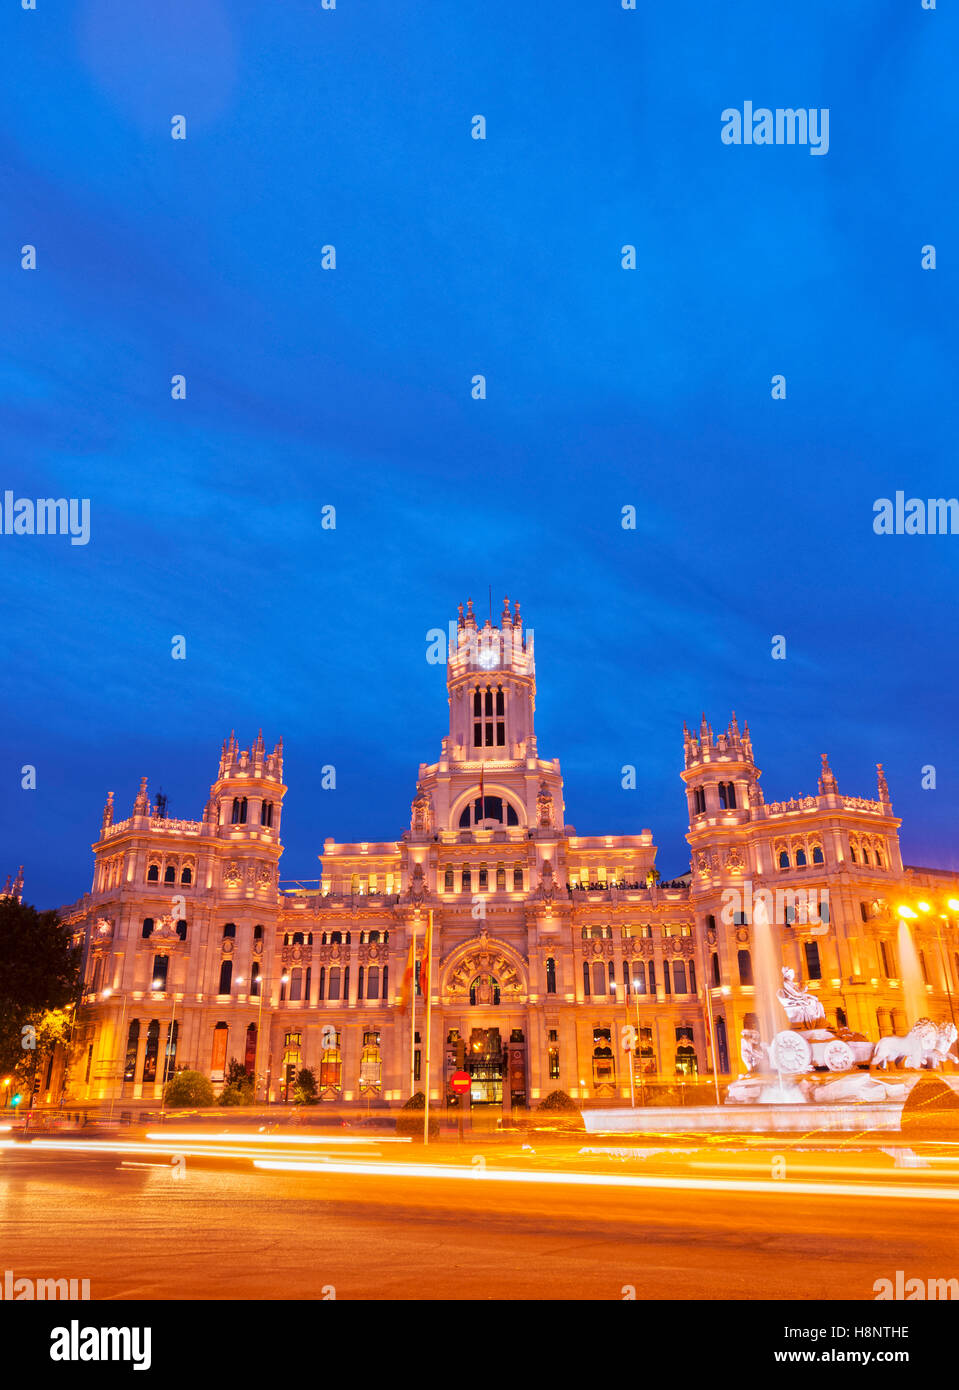 Spain, Madrid, Plaza de Cibeles, Twilight view of the Cybele Palace. Stock Photo